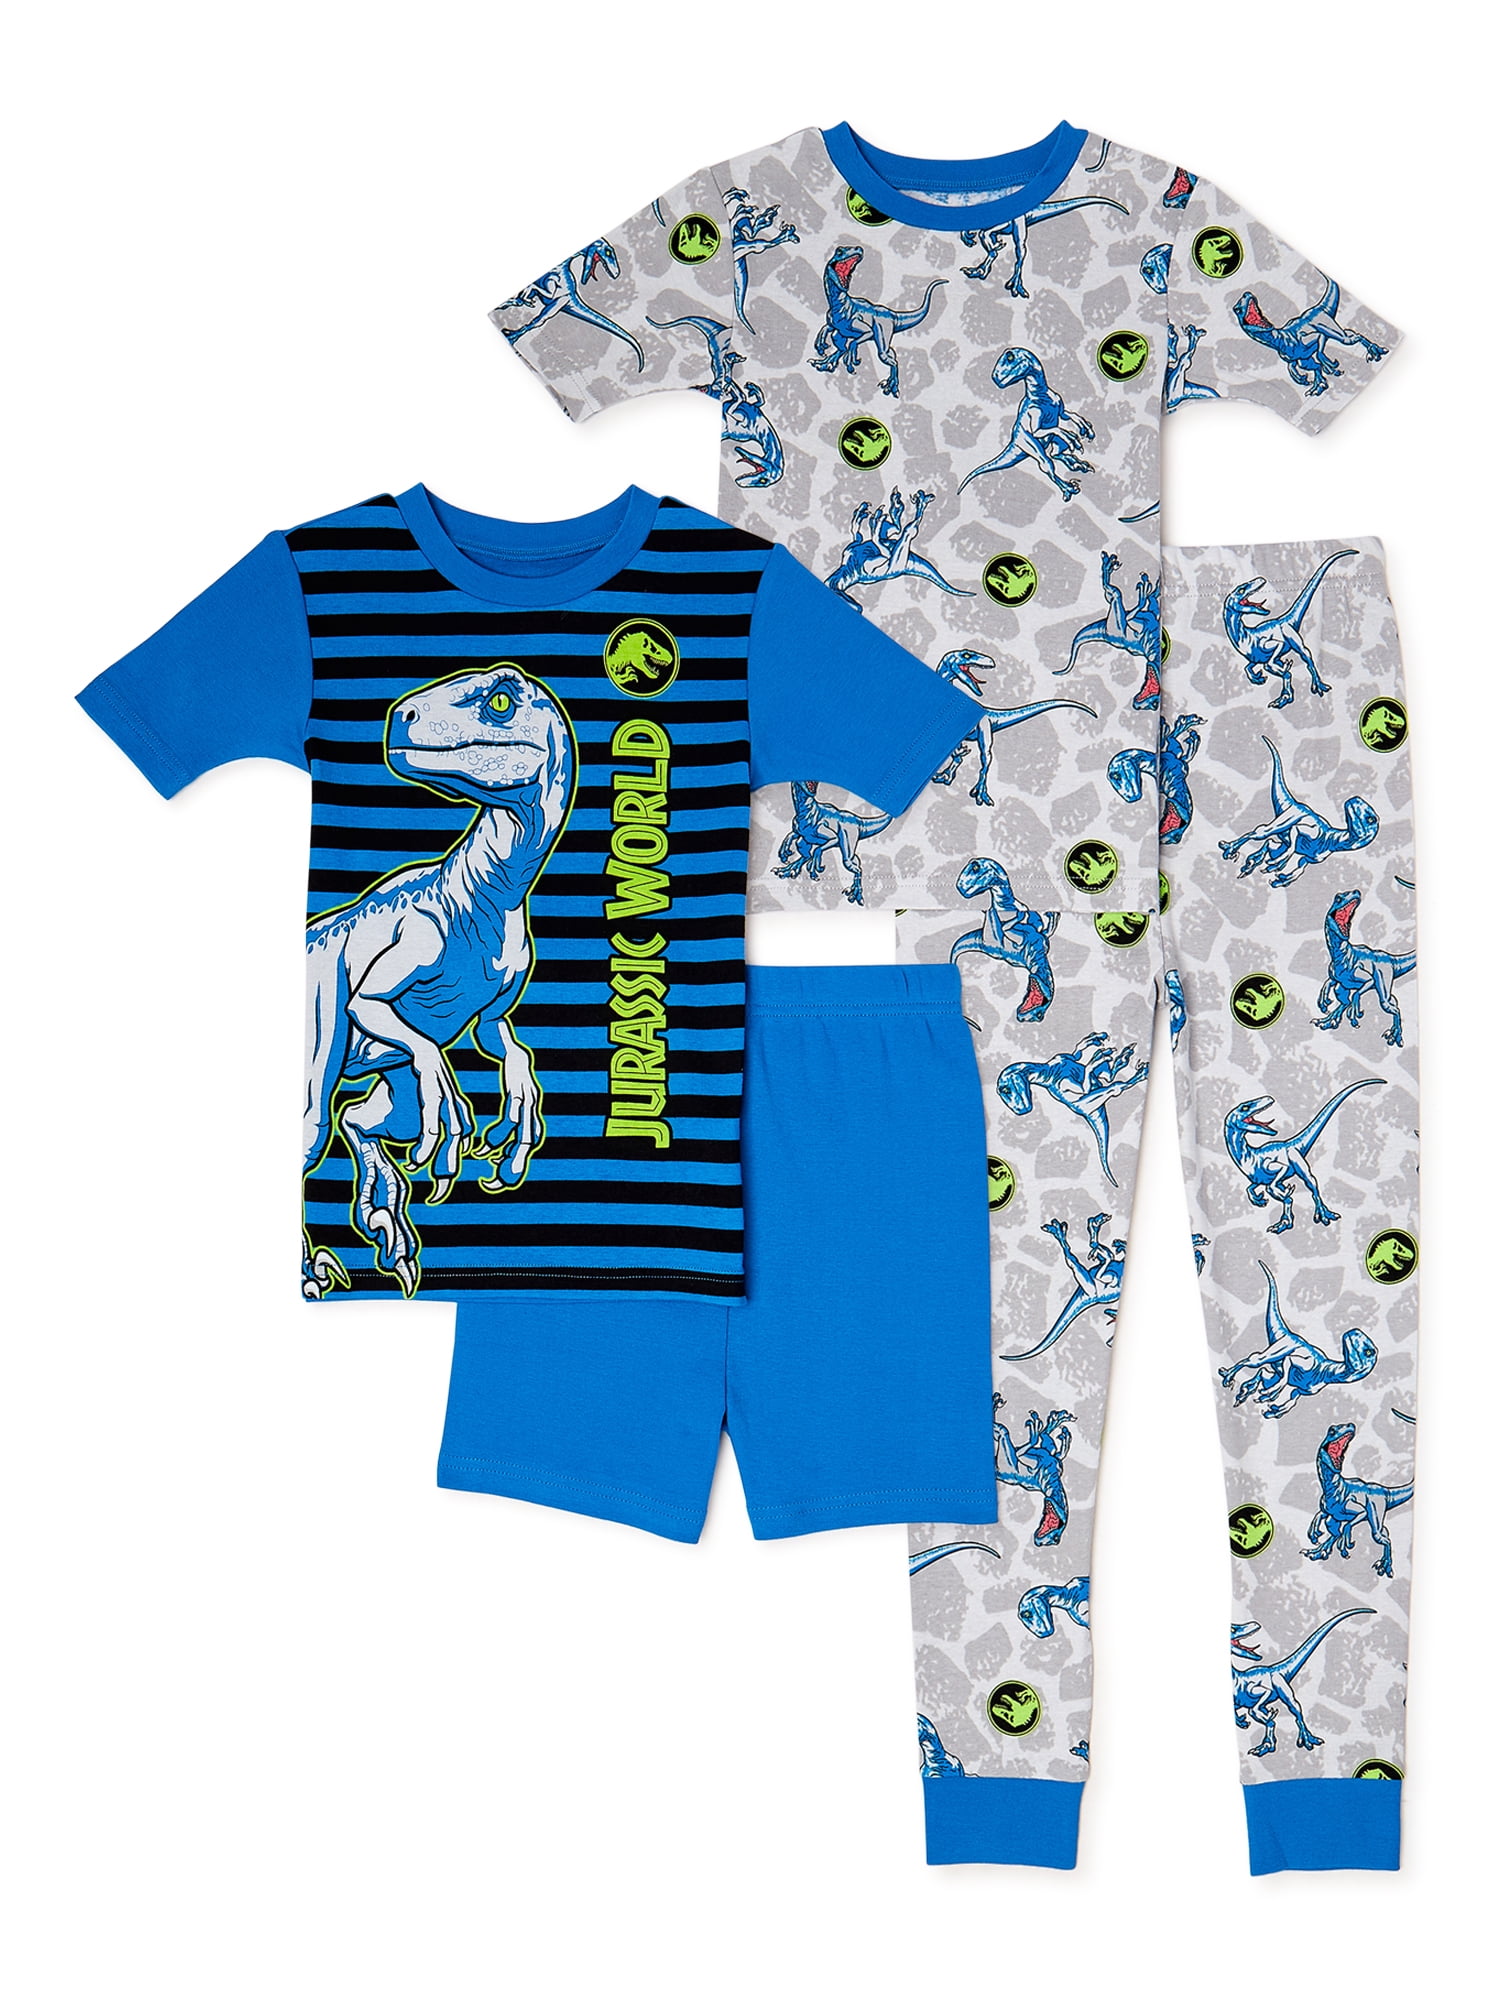 Boys Girls Kids Jurassic World Pyjamas Shorts Nightwear PJS Dinosaur Cotton 